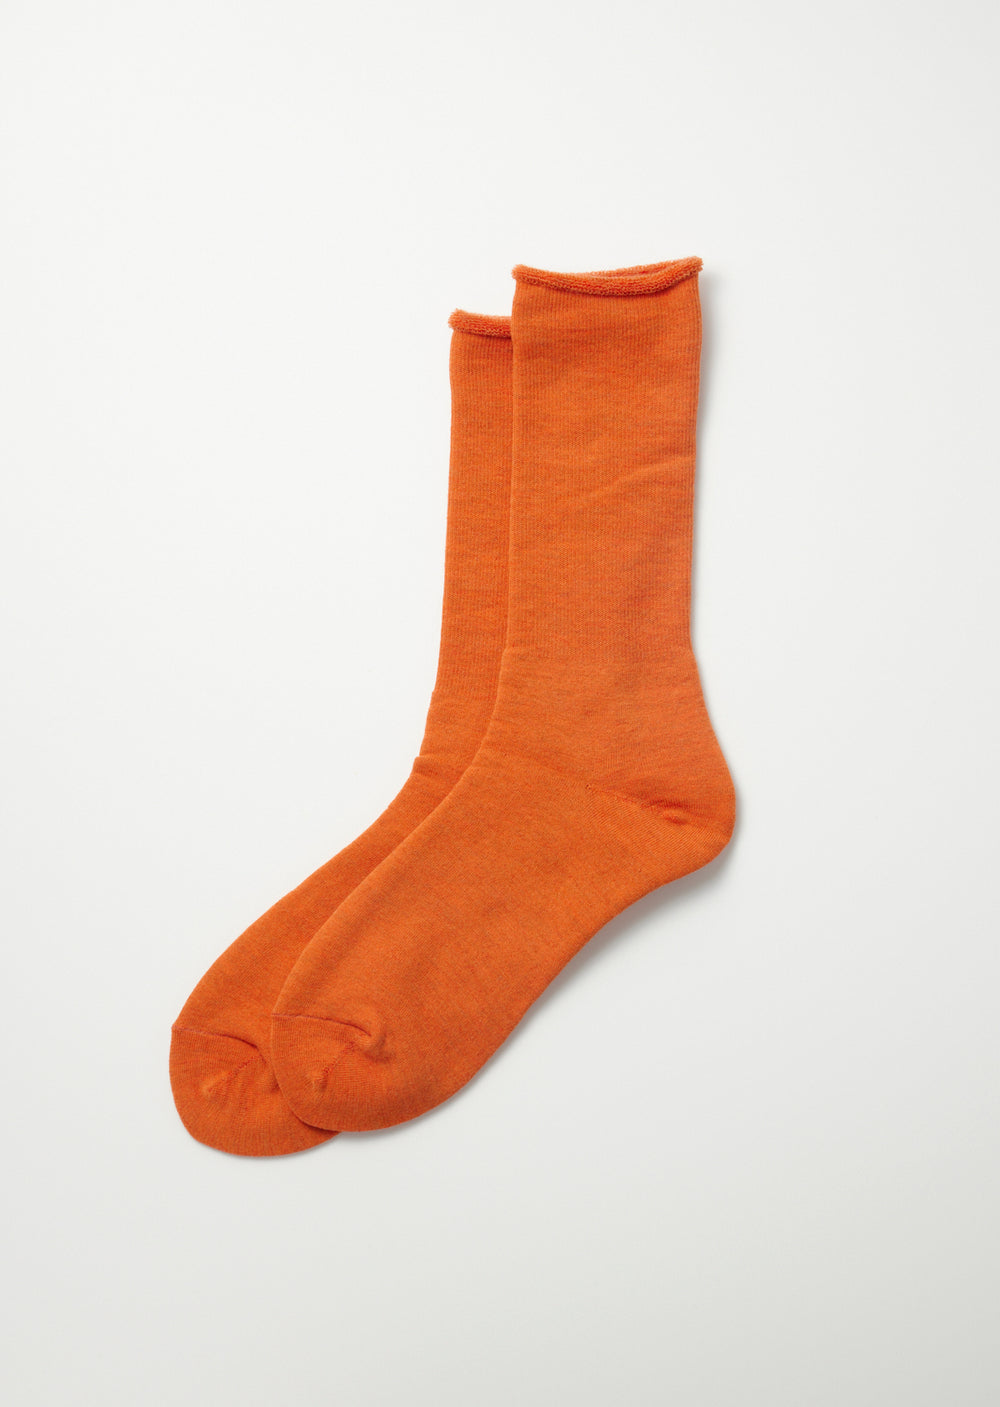 City Socks - Orange - R1044